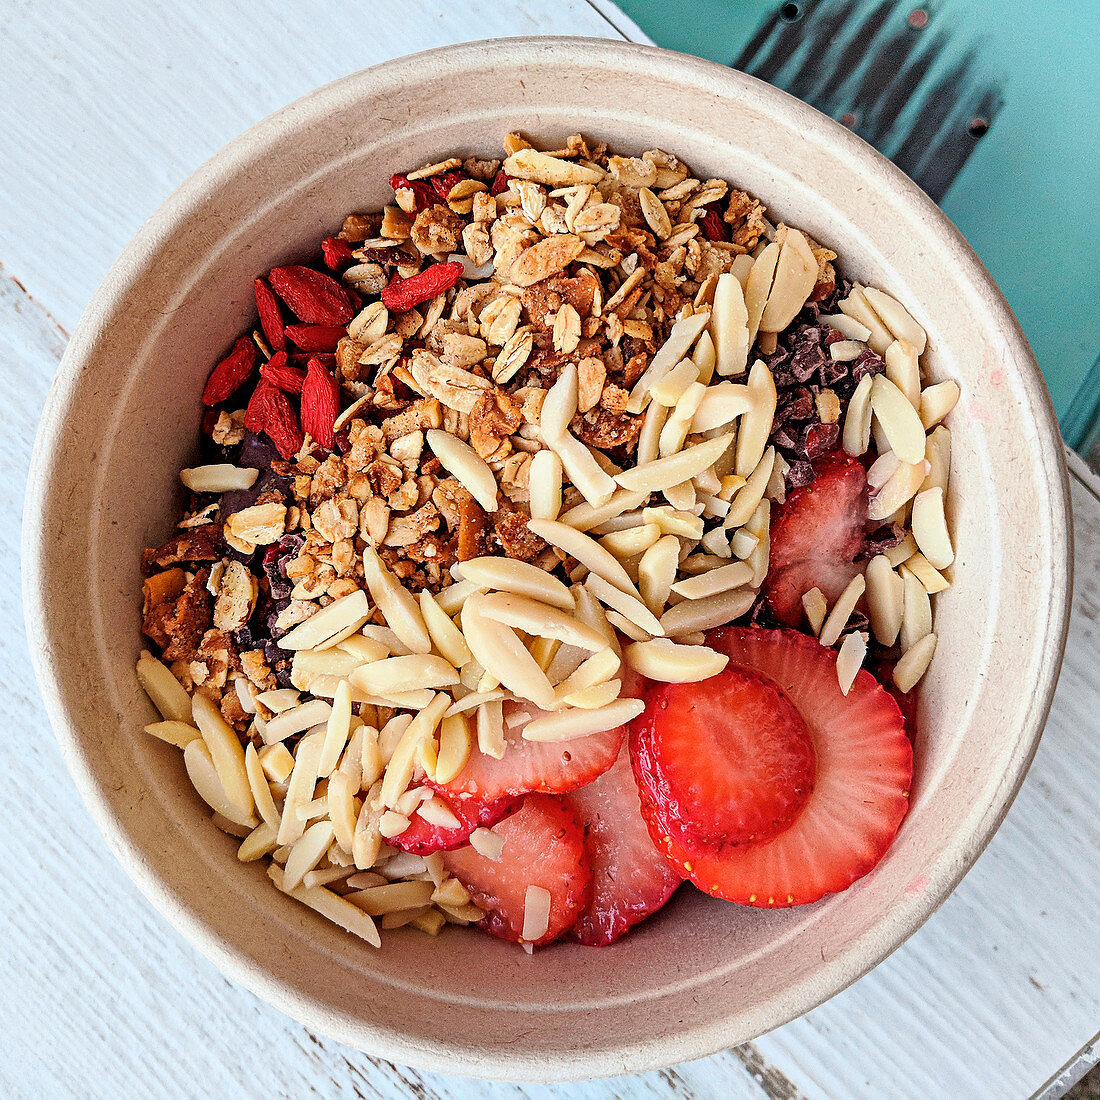 Breakfast bowl with granola, banana, goji berries, almonds and strawberries